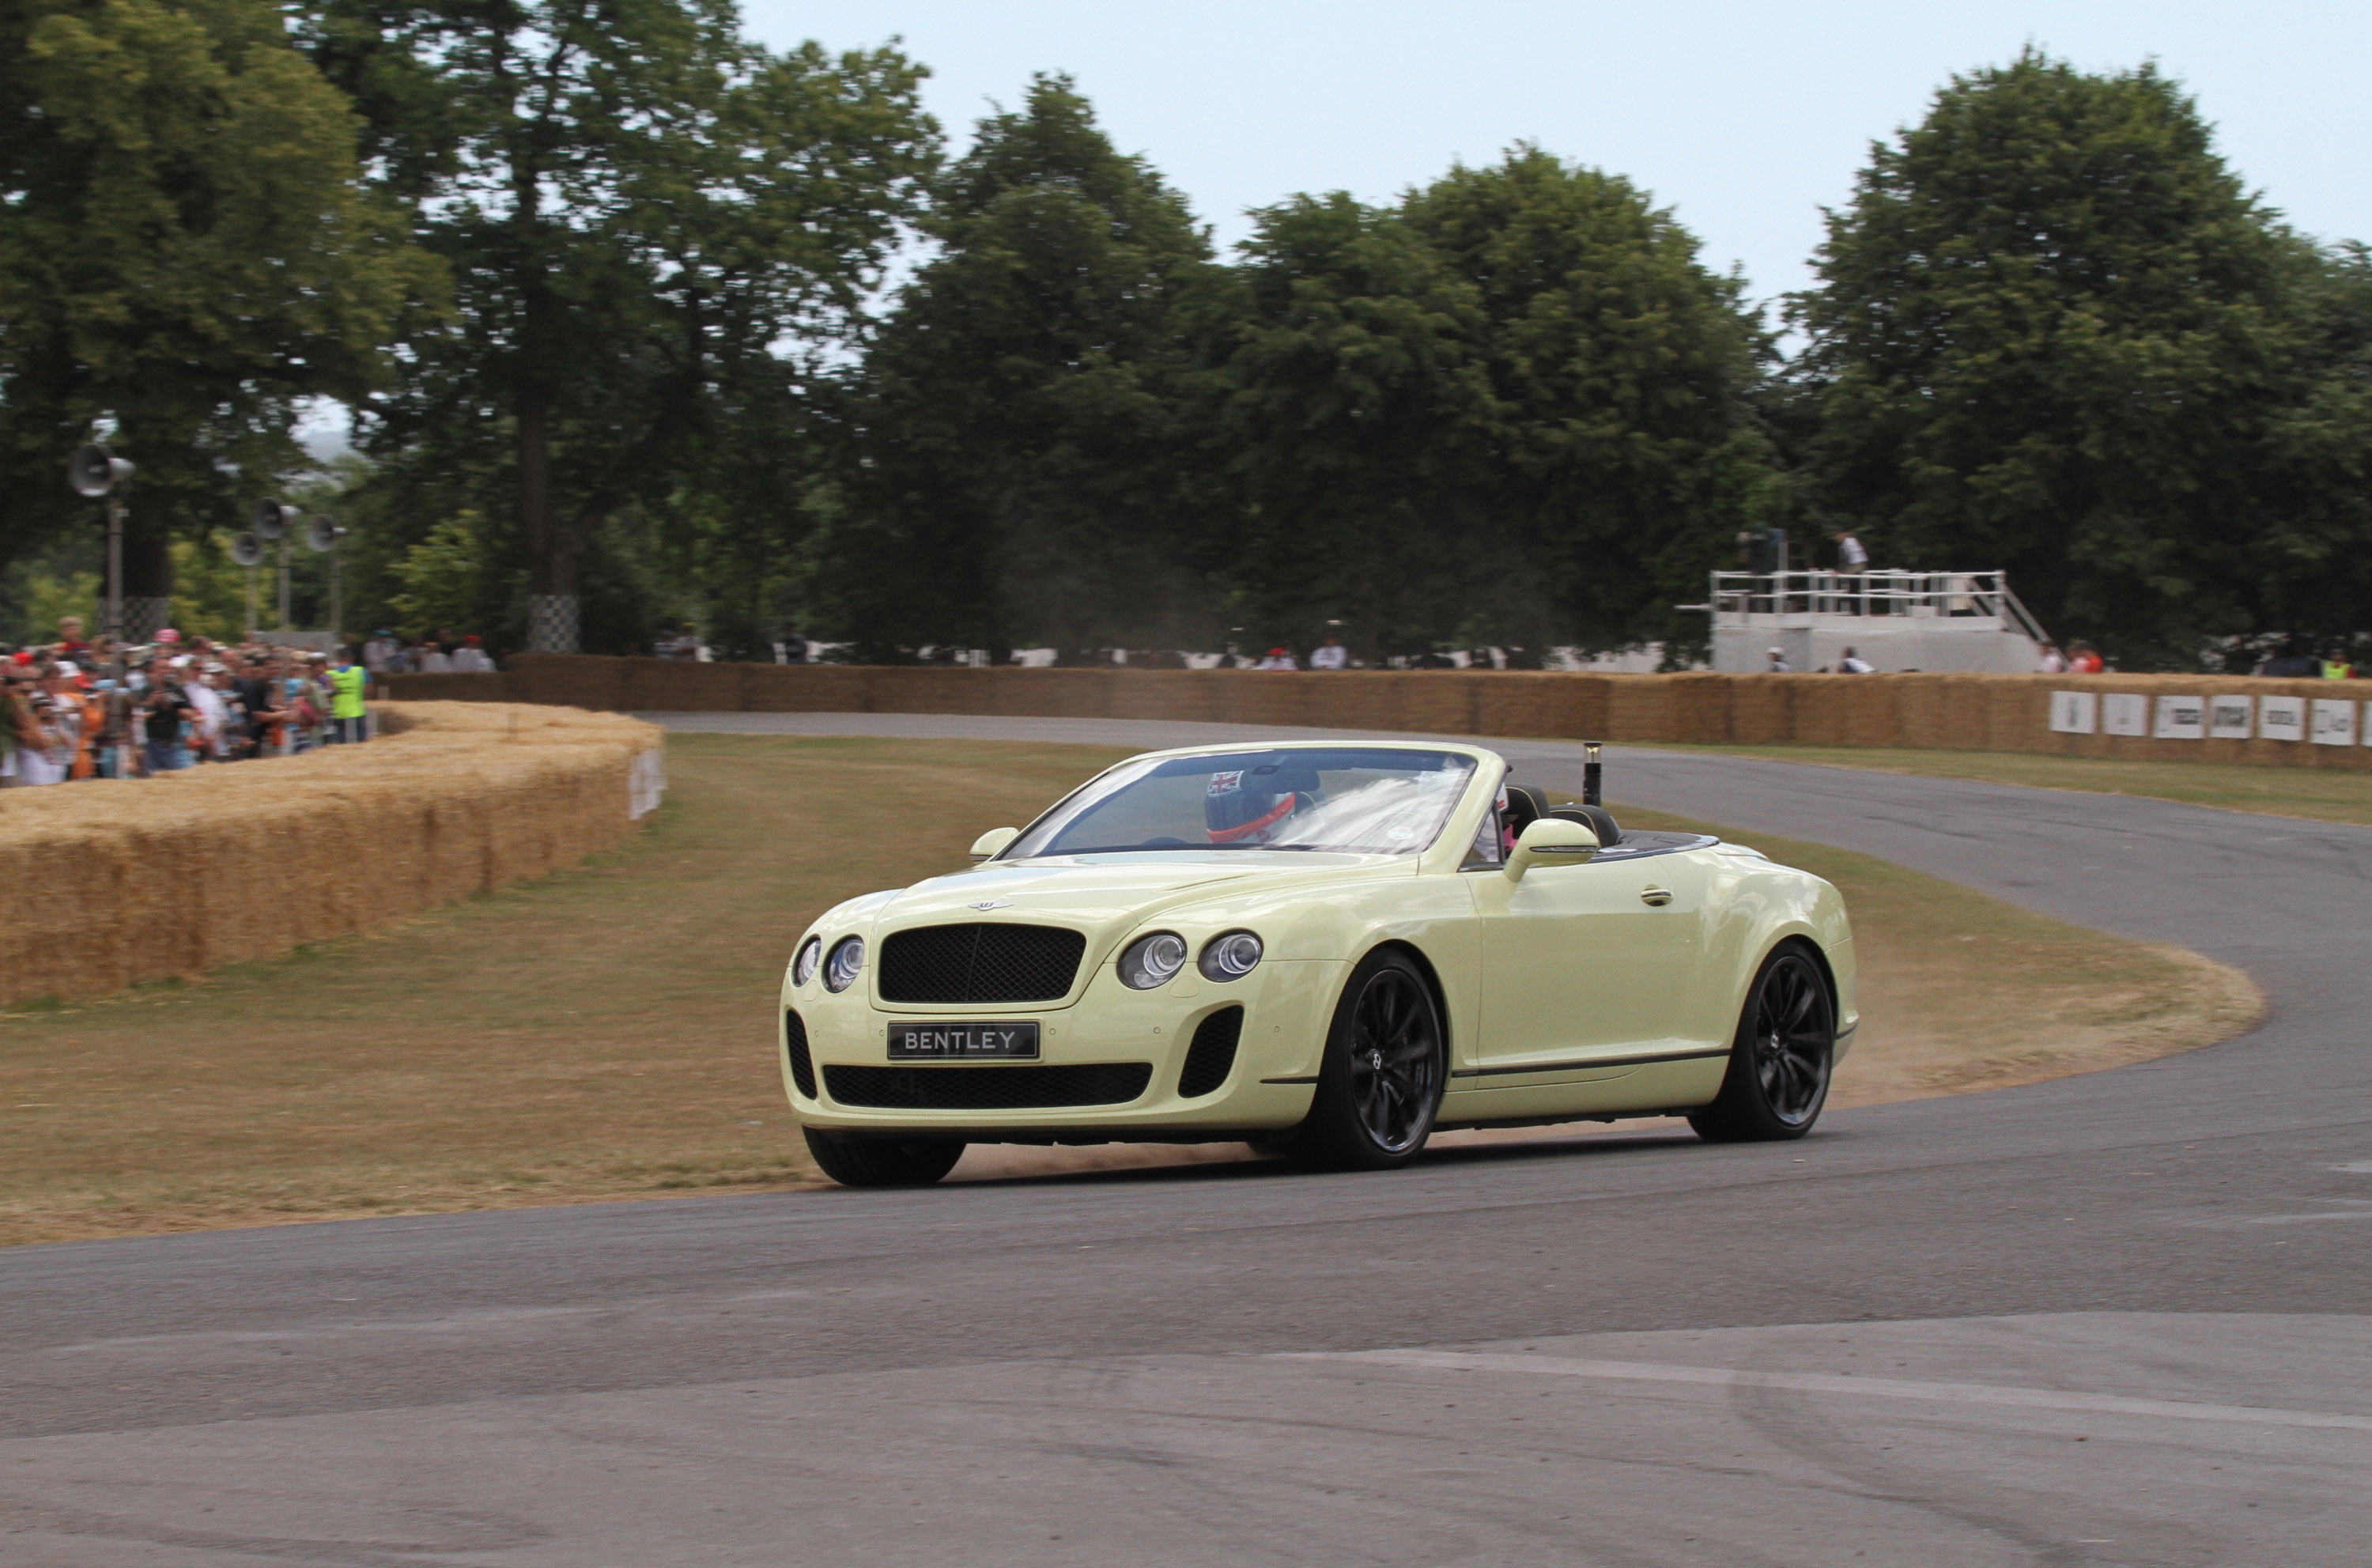 2011 Bentley Continental Supersports Convertible at Goodwood